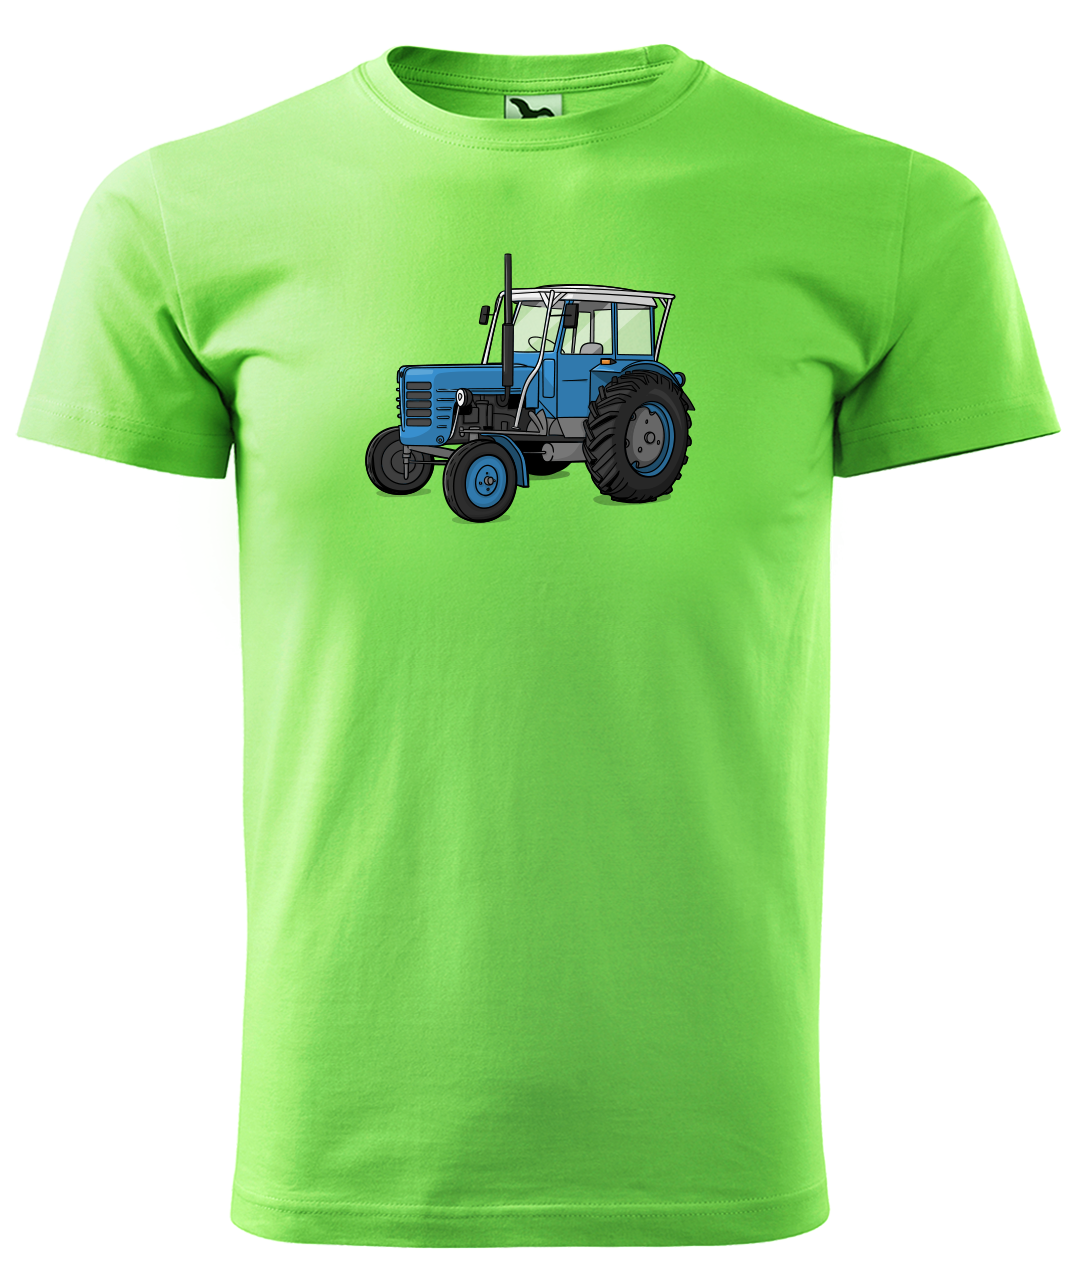 Dětské tričko s traktorem - Starý traktor Velikost: 4 roky / 110 cm, Barva: Apple Green (92)